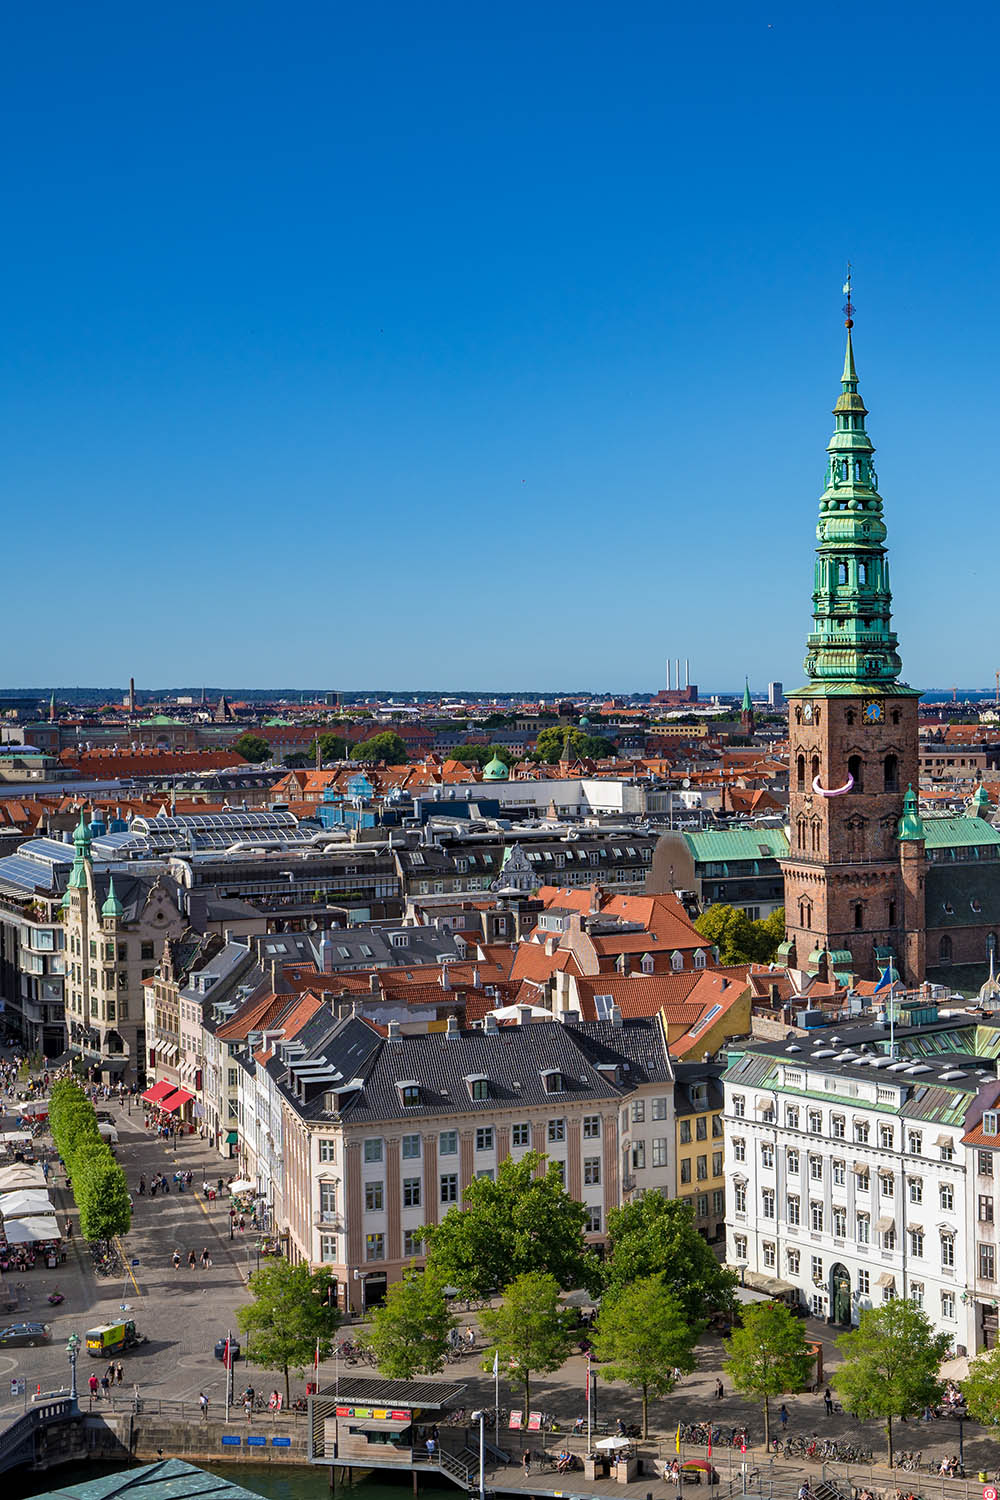 Living the urban future in Copenhagen